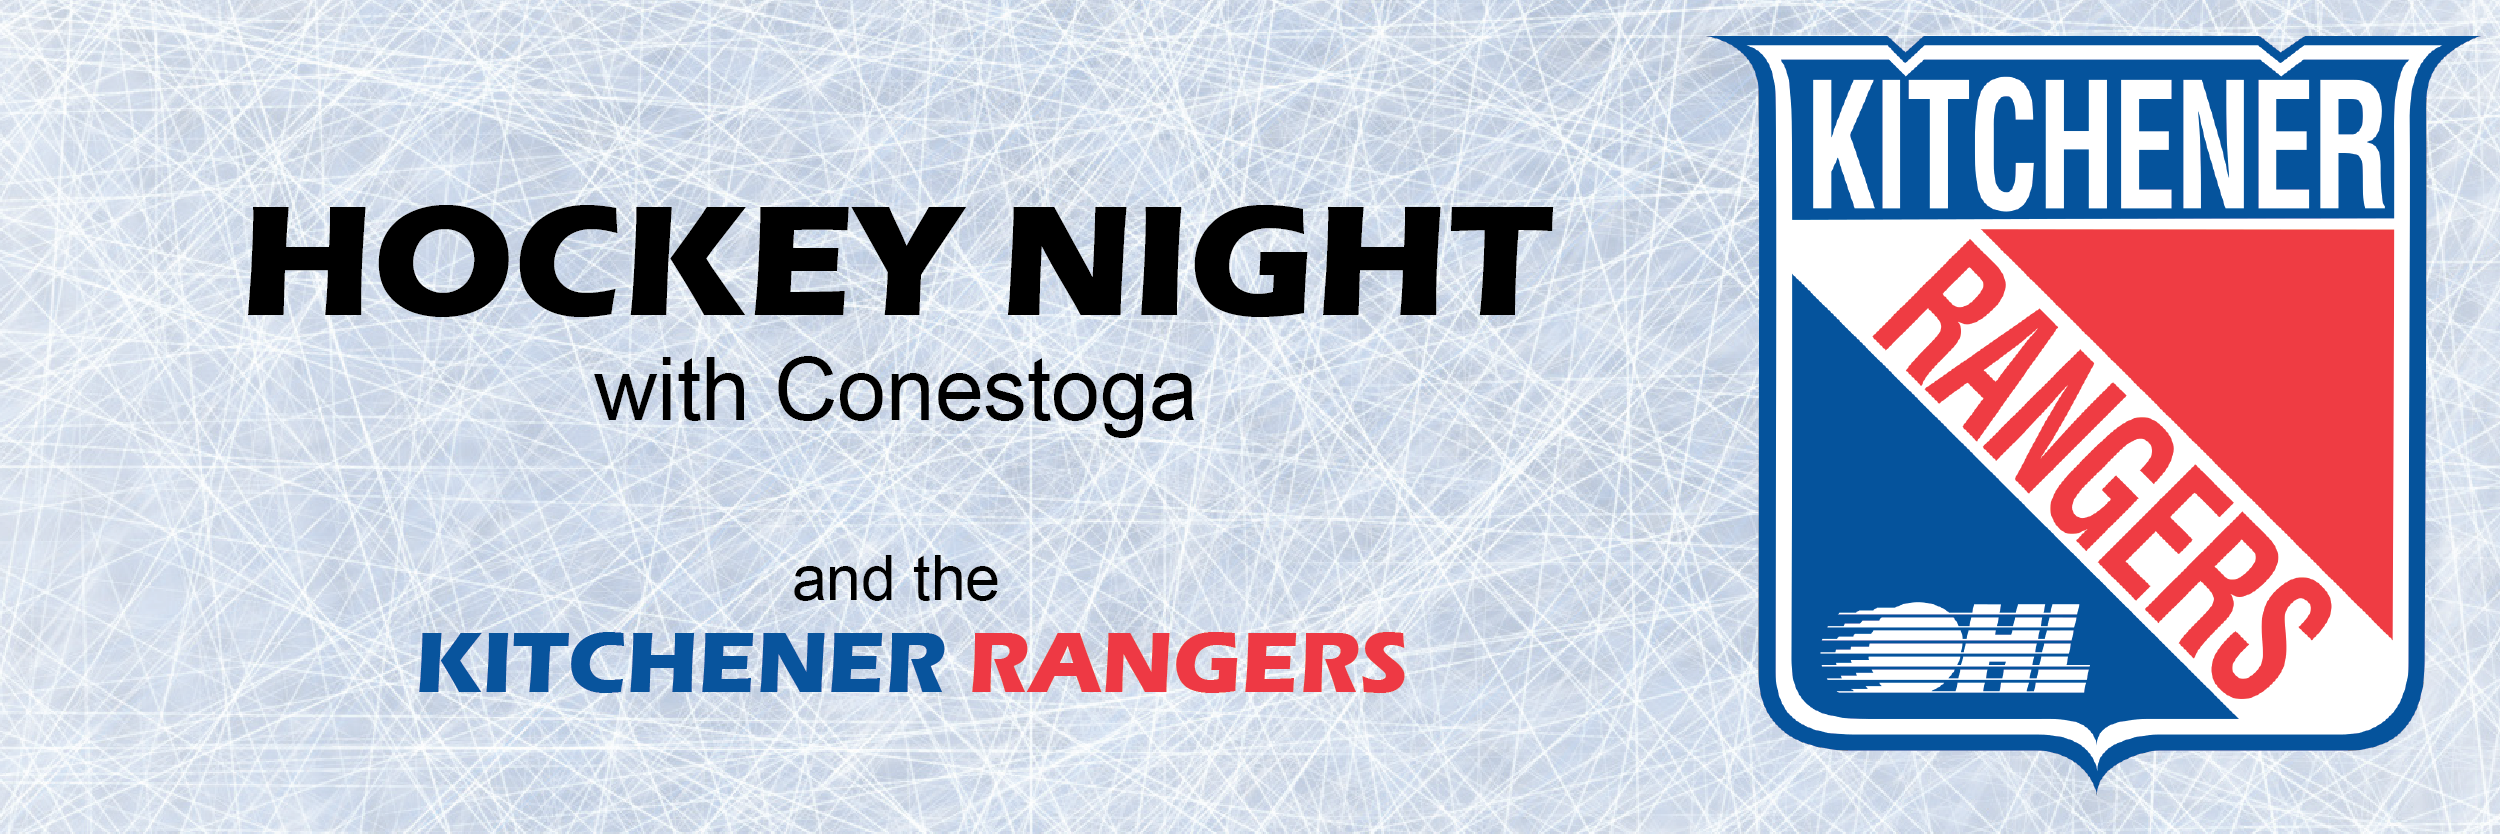 Hockey night with Conestoga and the Kitchener Rangers